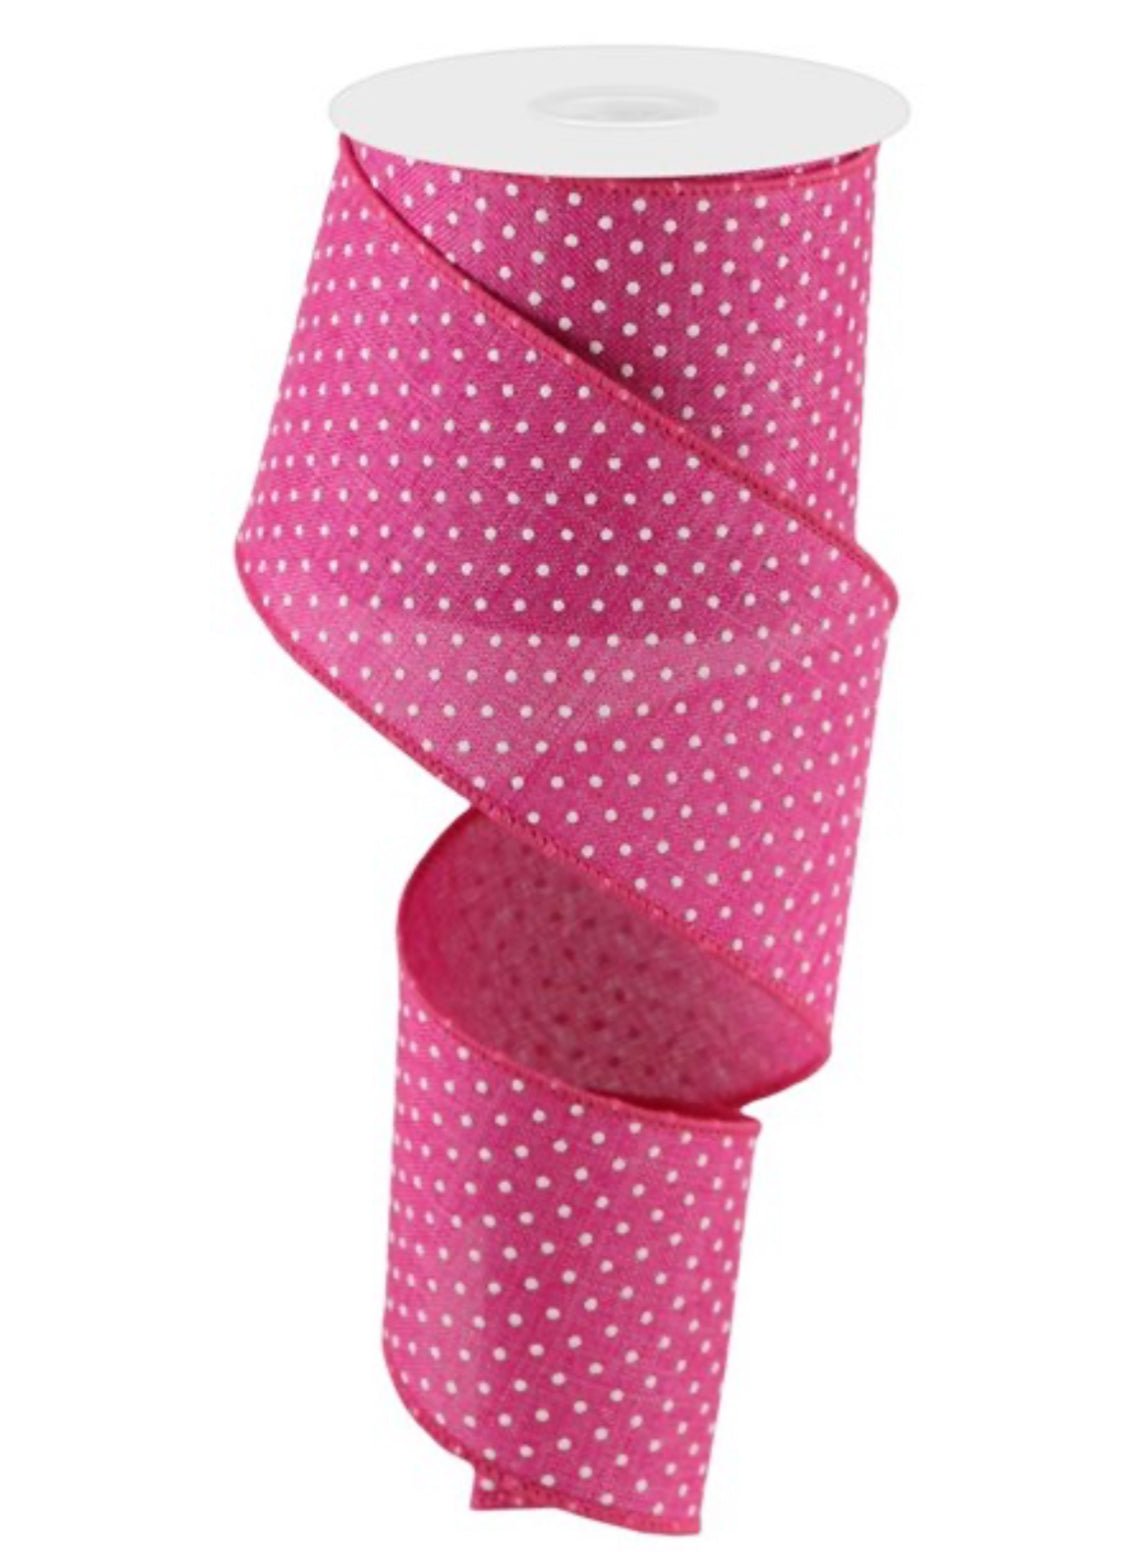 Pink and white Swiss dots on royal 2.5” - Greenery MarketWired ribbonRG0165207